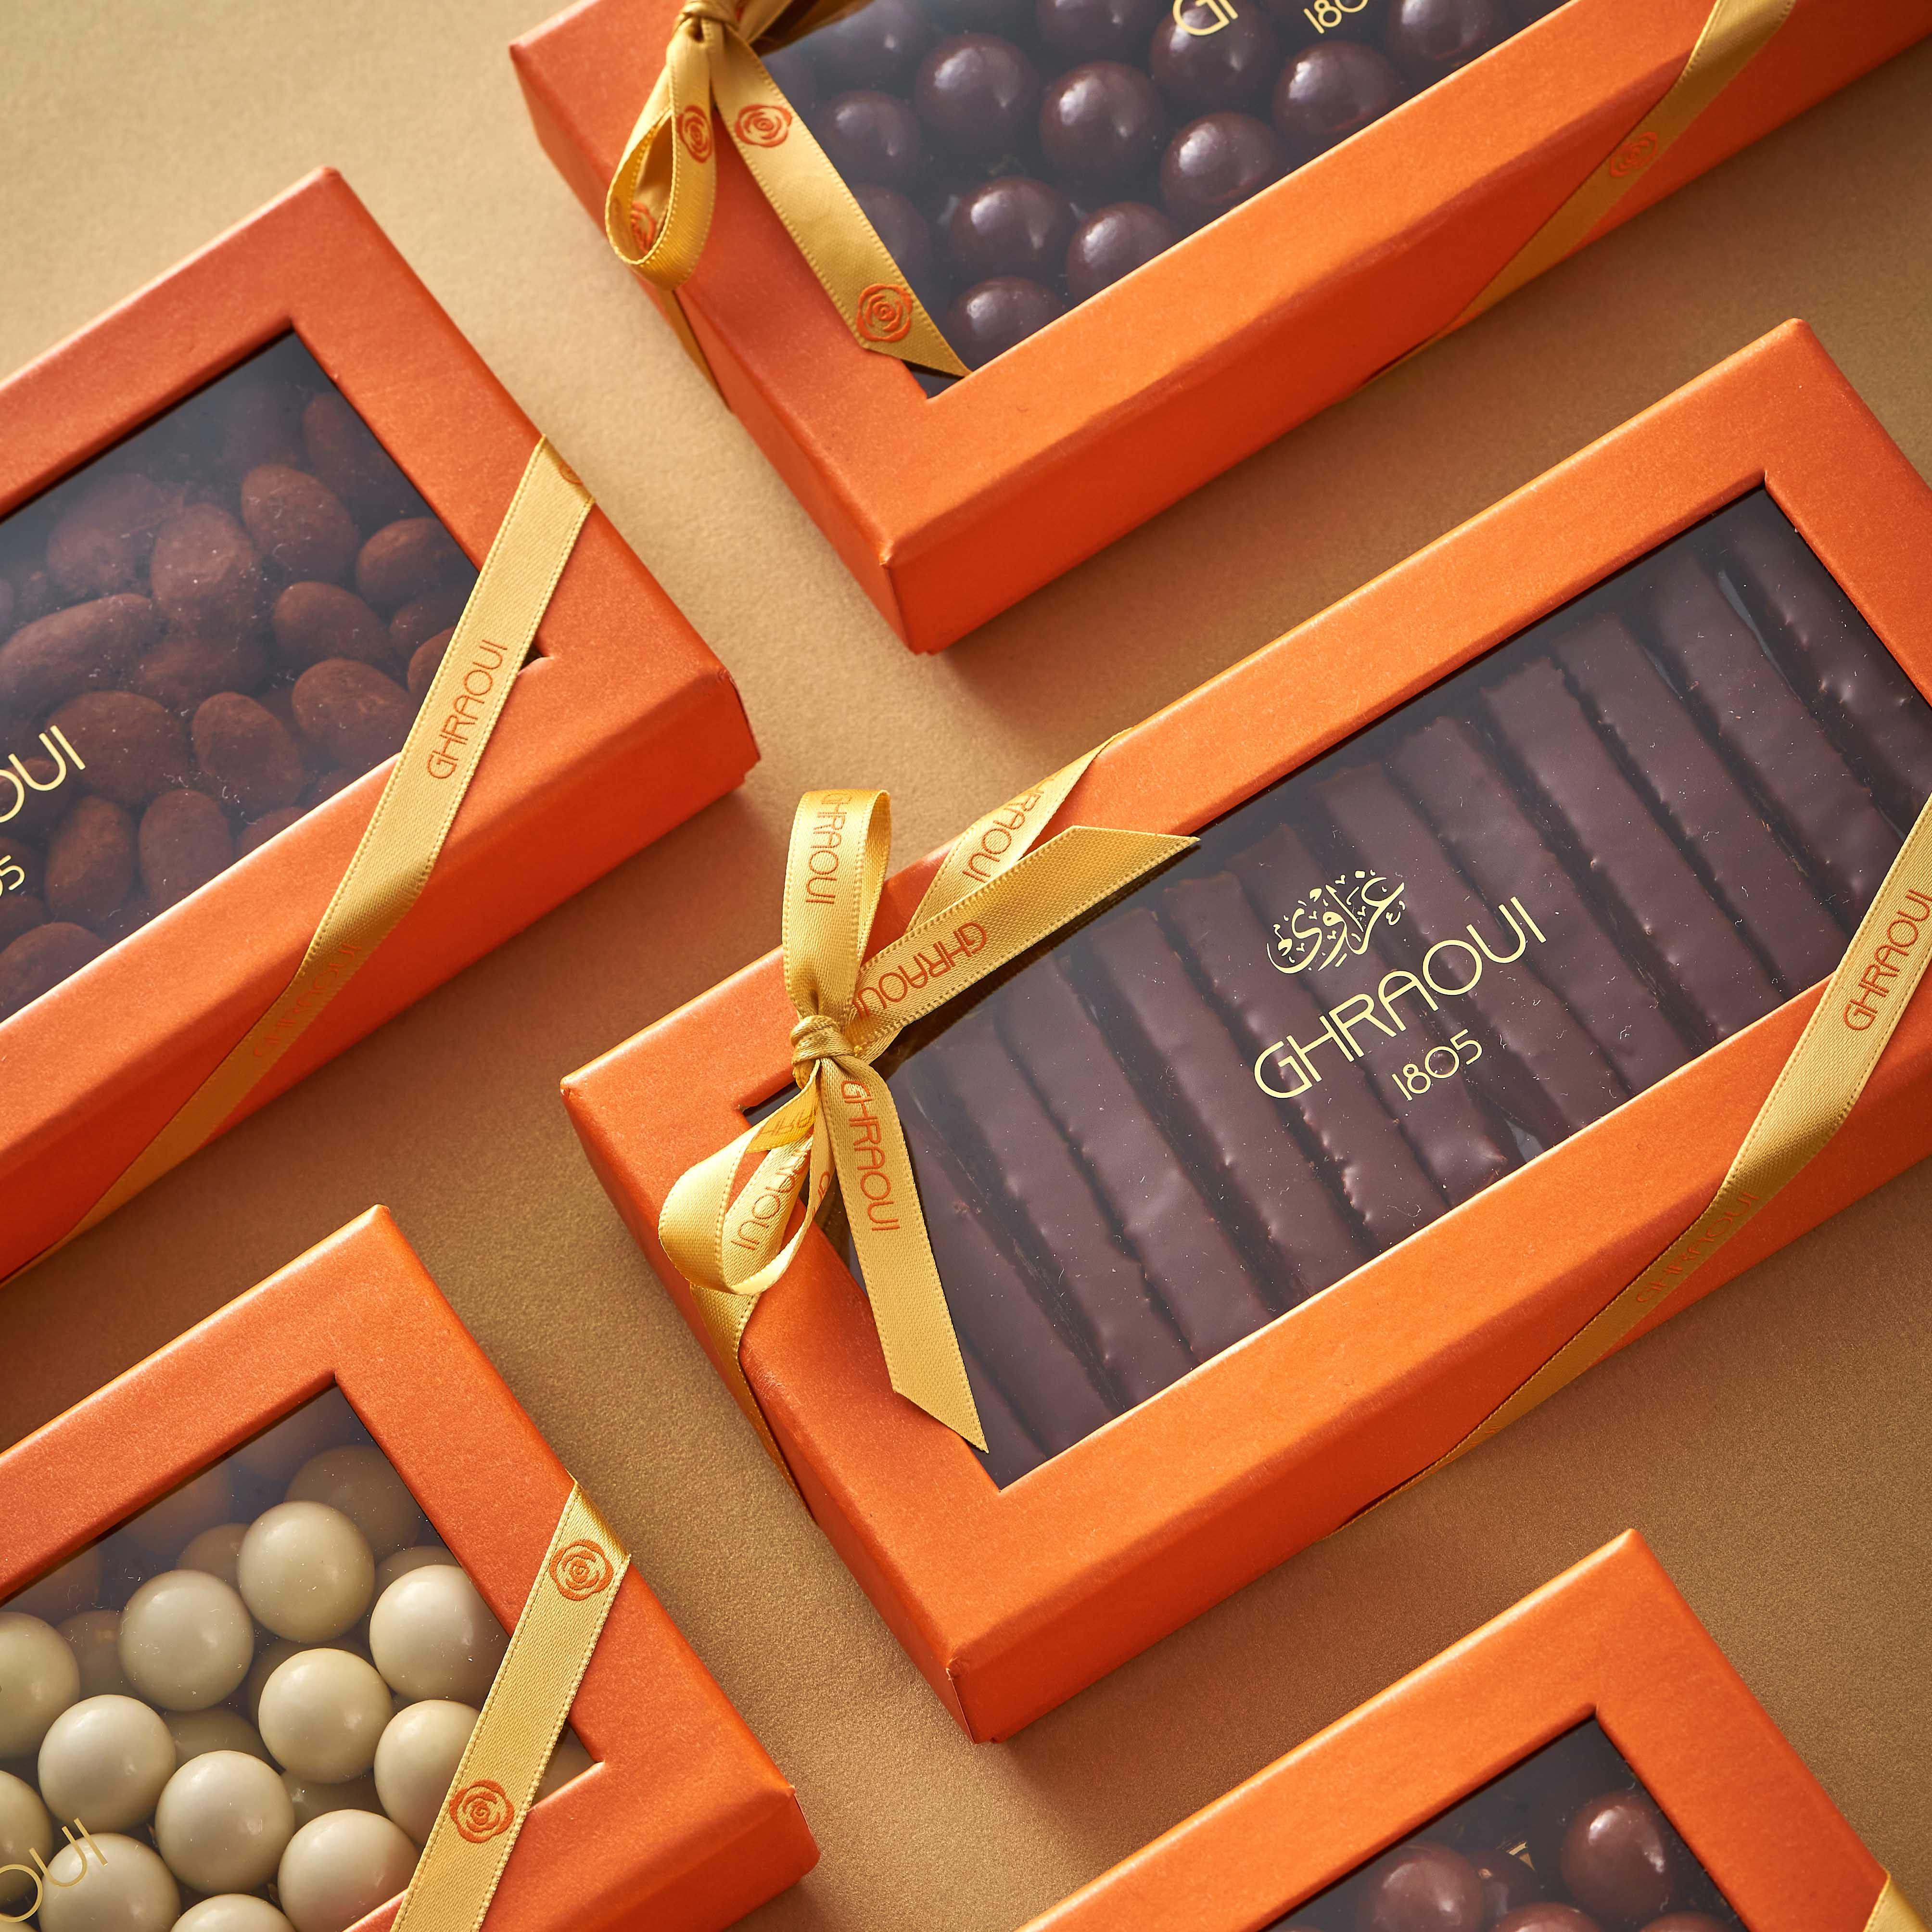 Orangettes au chocolat noir 125g – LaPlaza